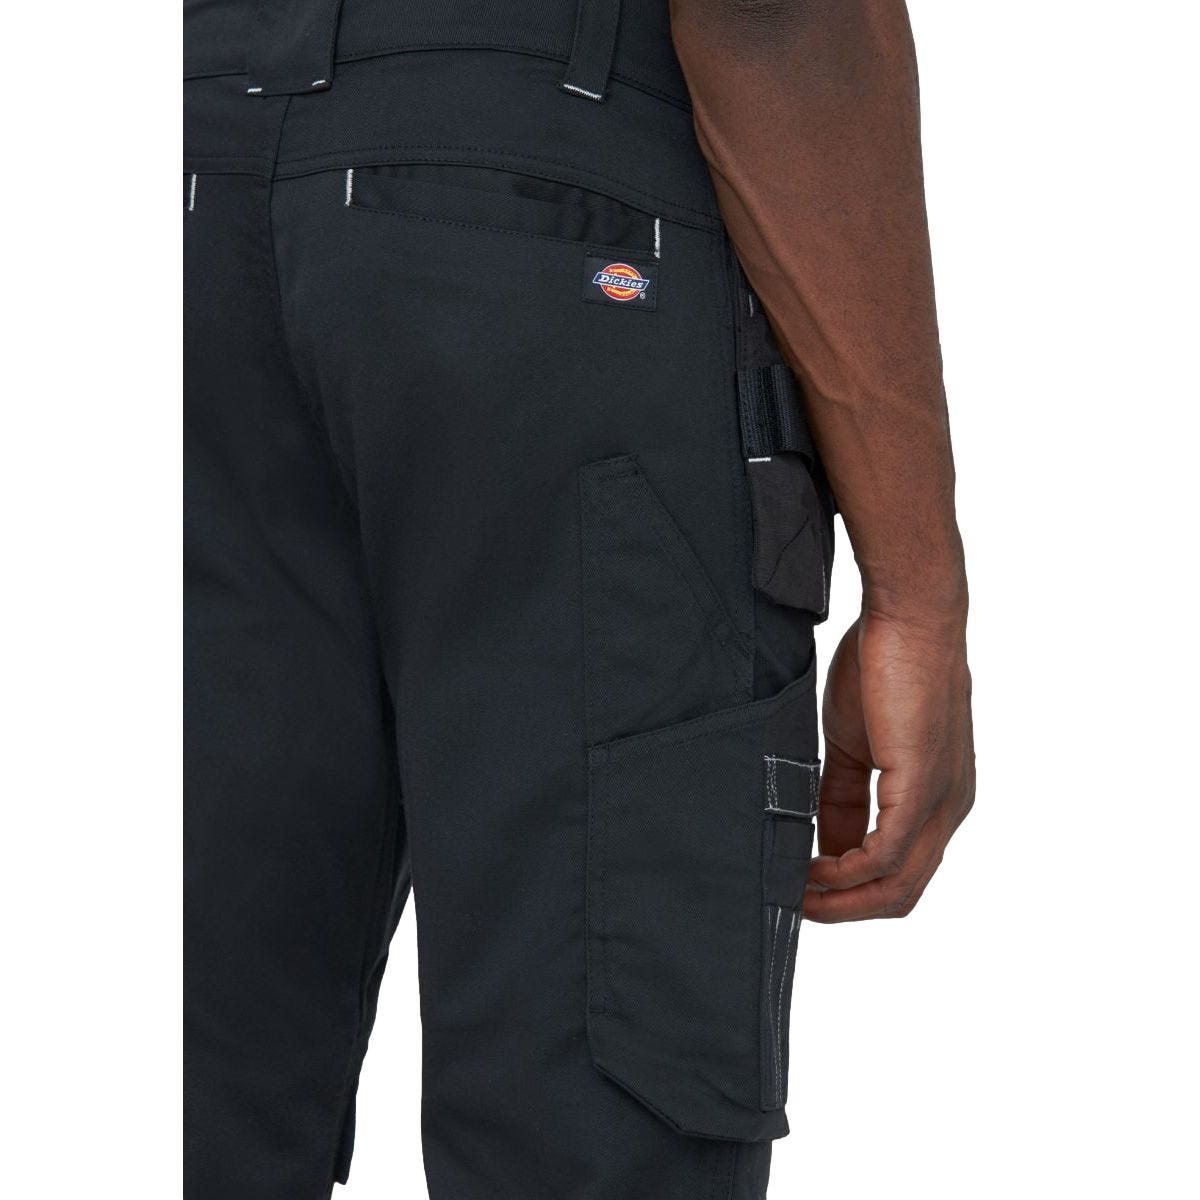 Pantalon Universal Flex Noir - Dickies - Taille 48 4